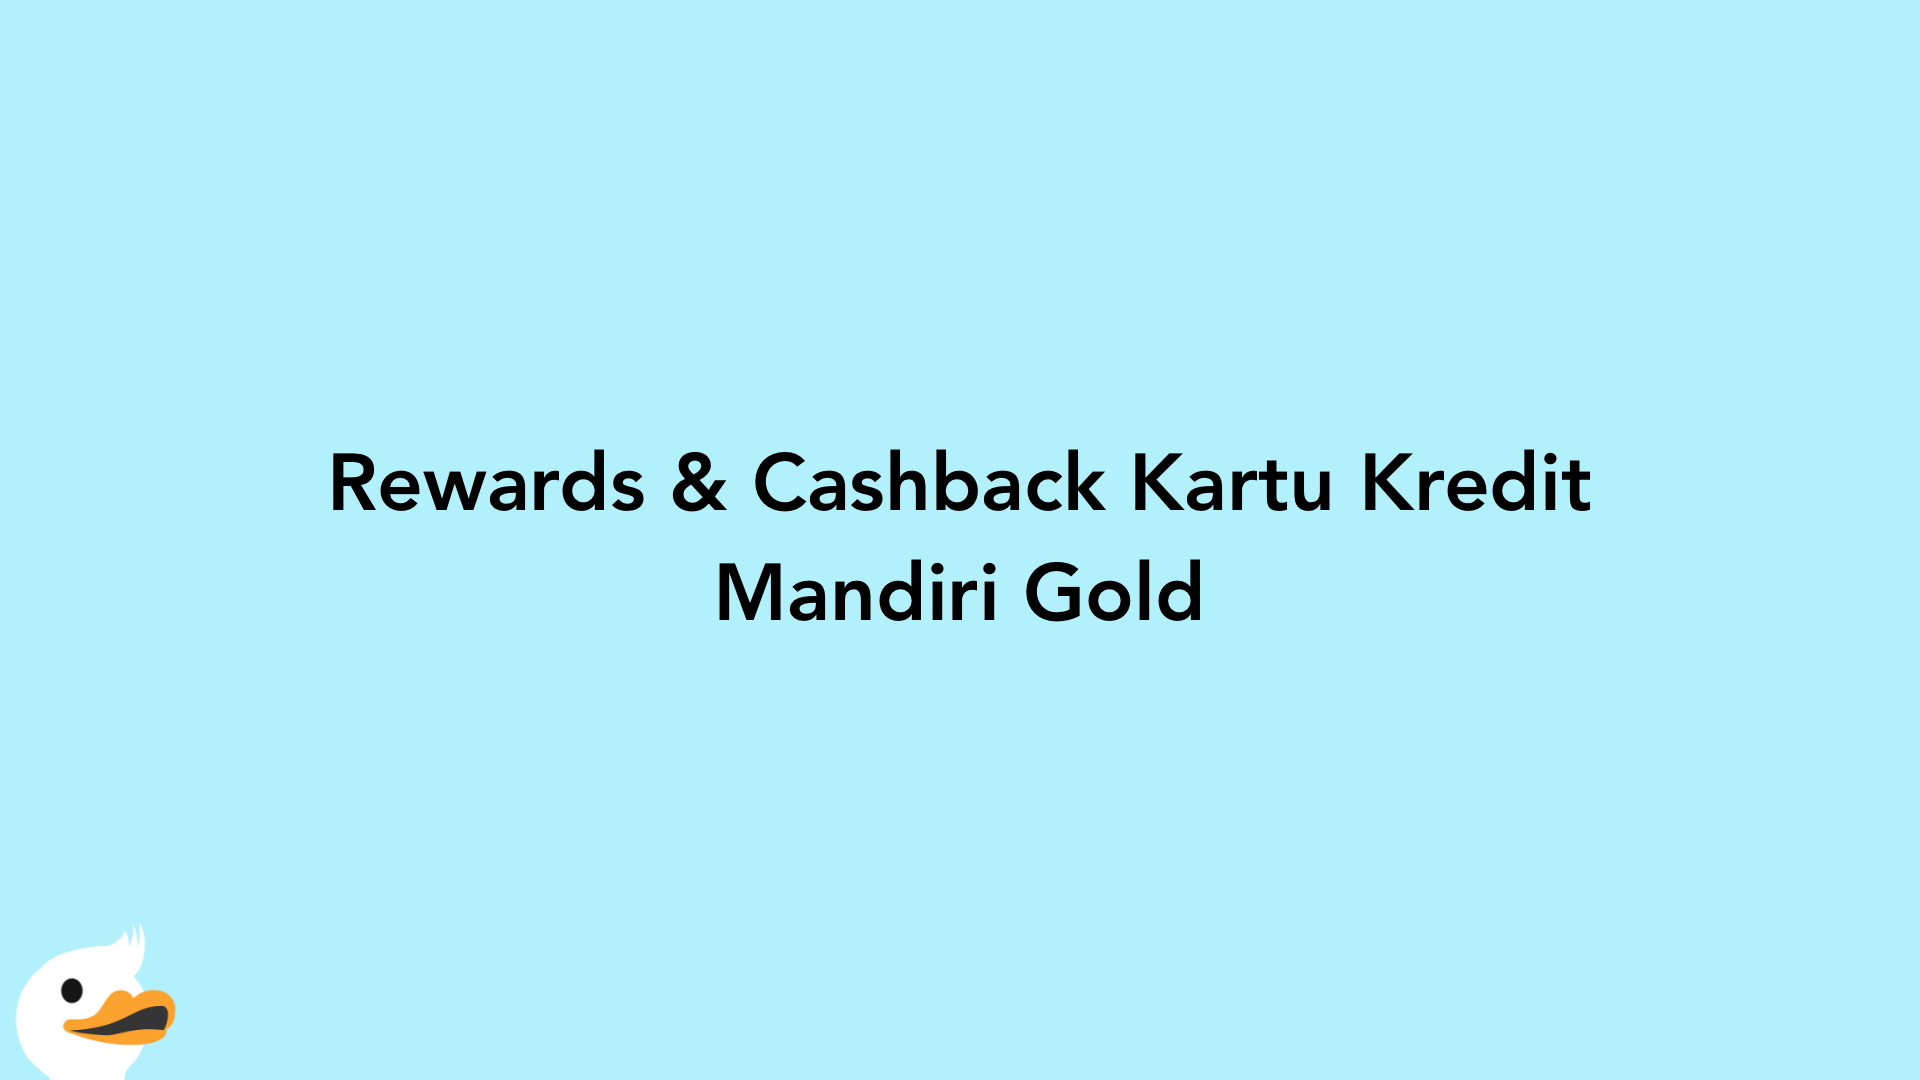 Rewards & Cashback Kartu Kredit Mandiri Gold